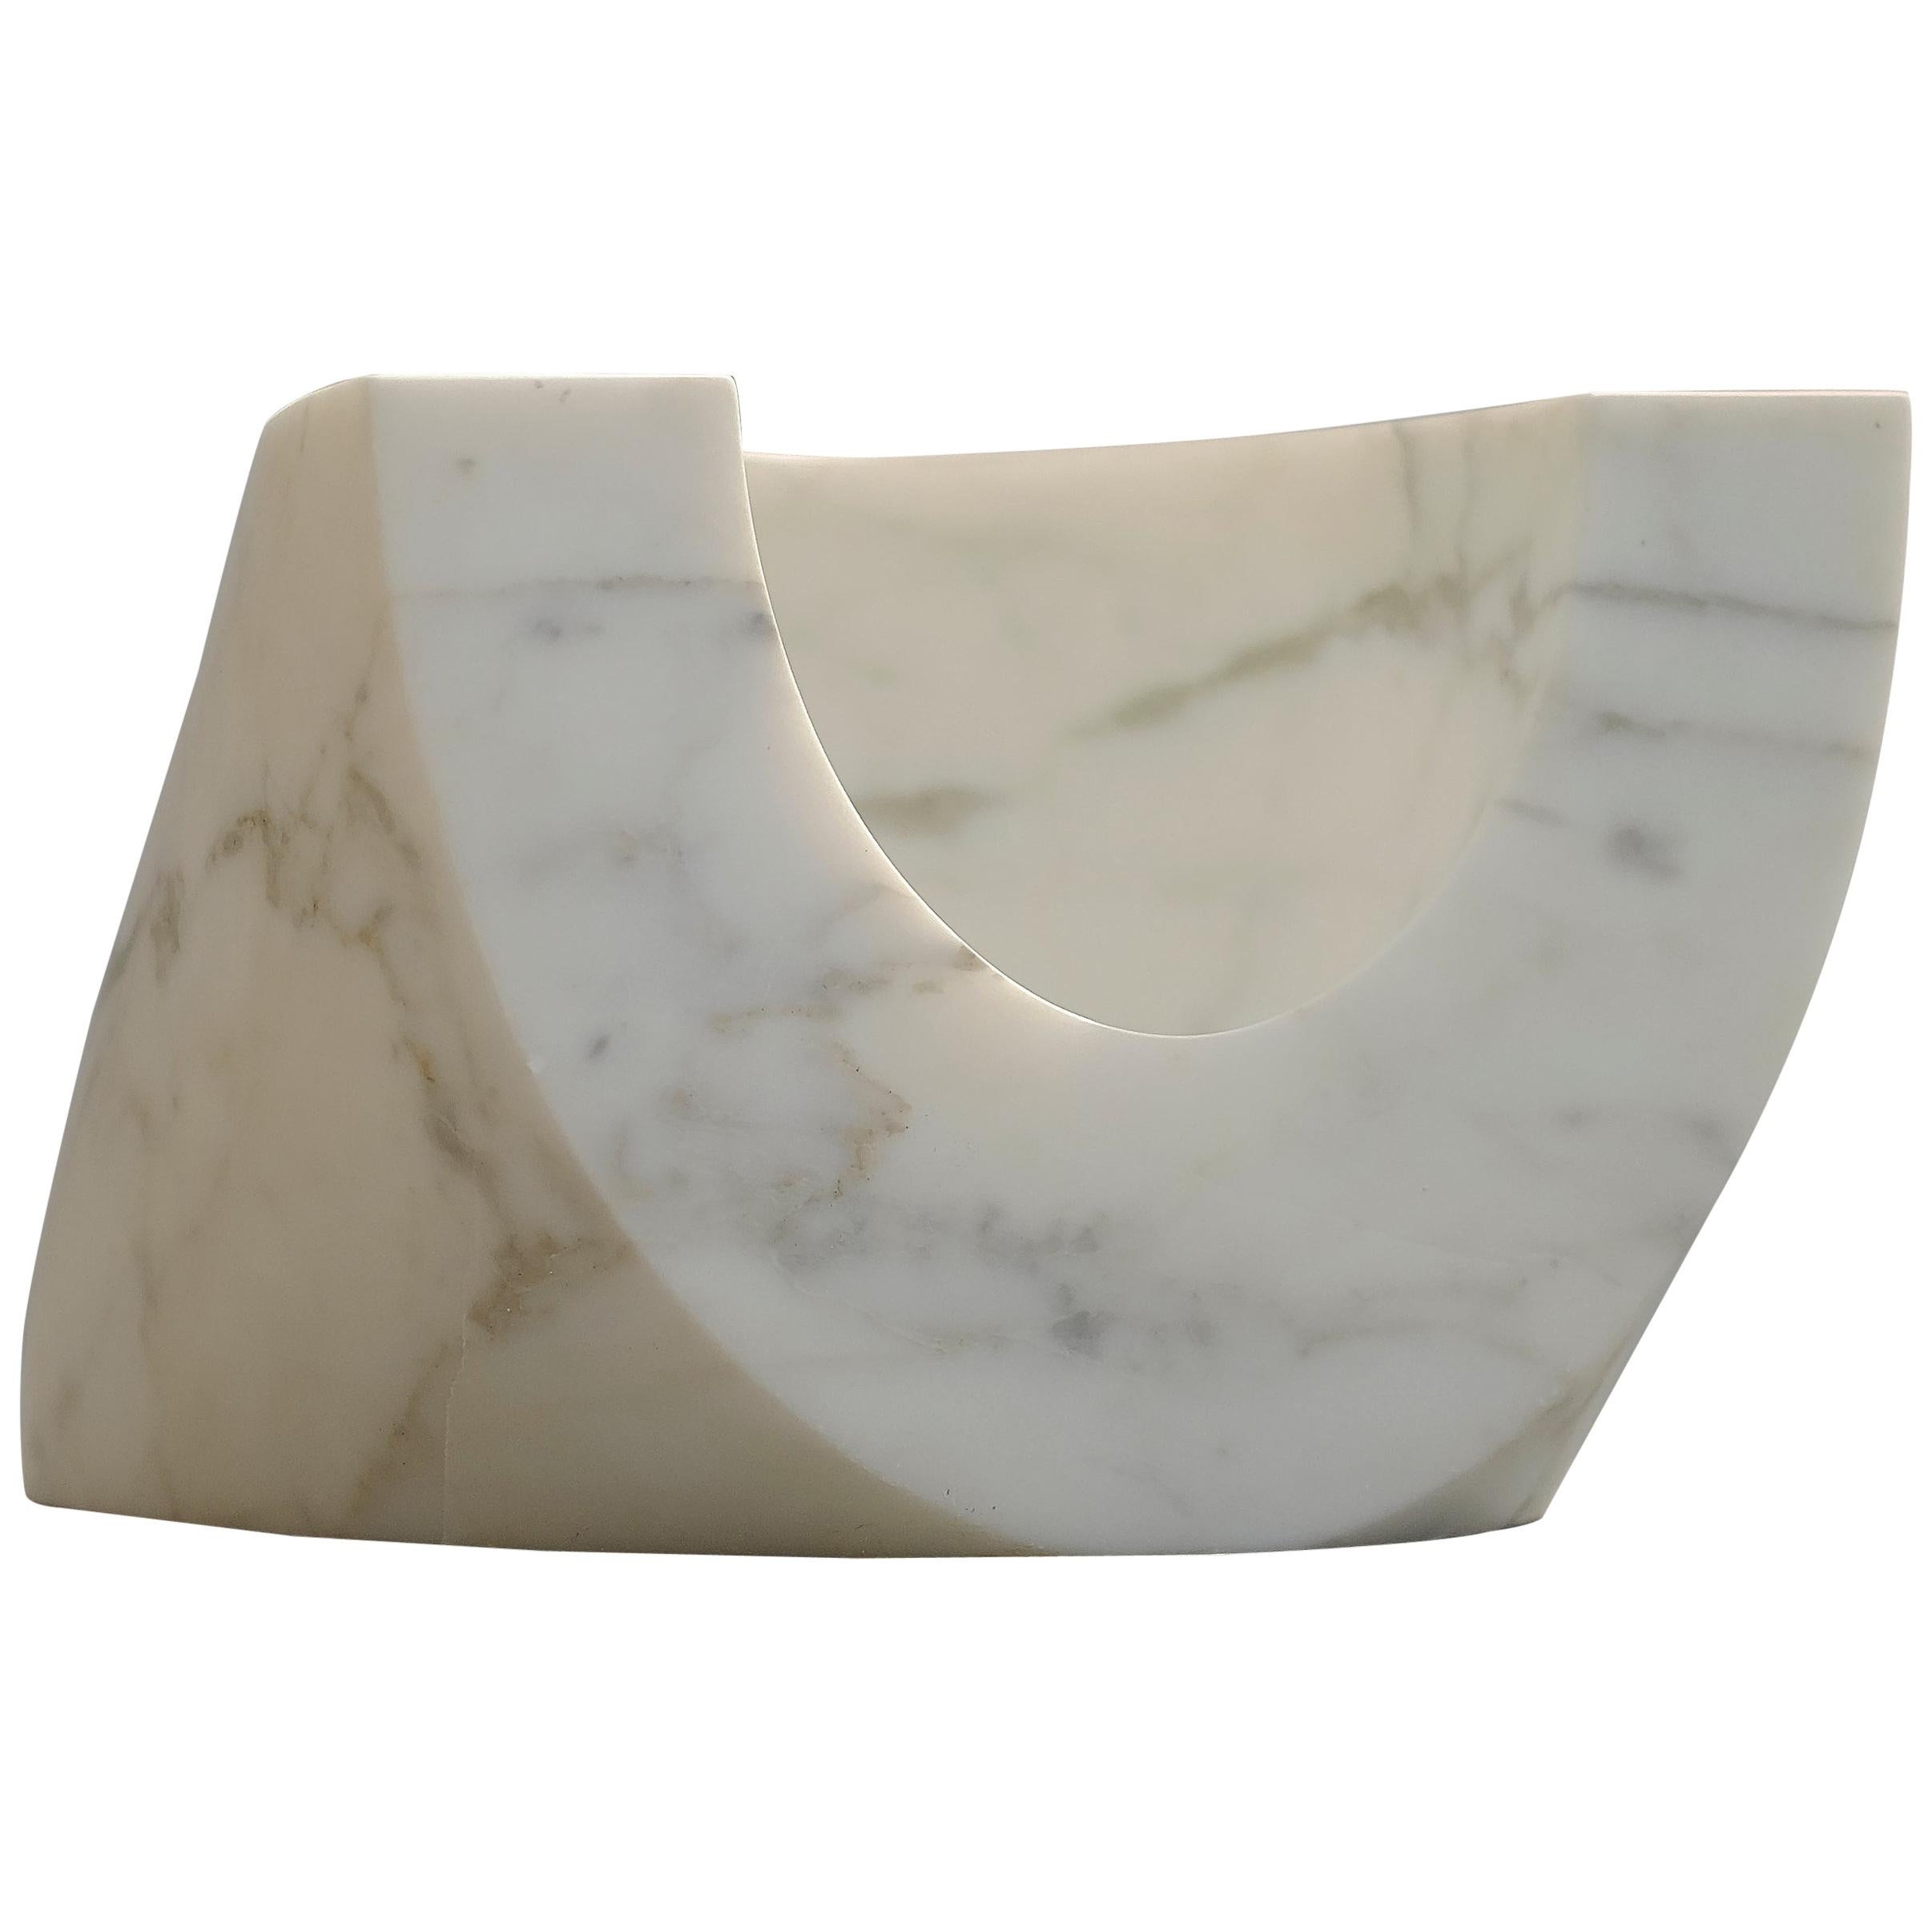 21st Century by Arch. E. Mari "PAROS B" Marble Sculpture Vase Centerpiece For Sale